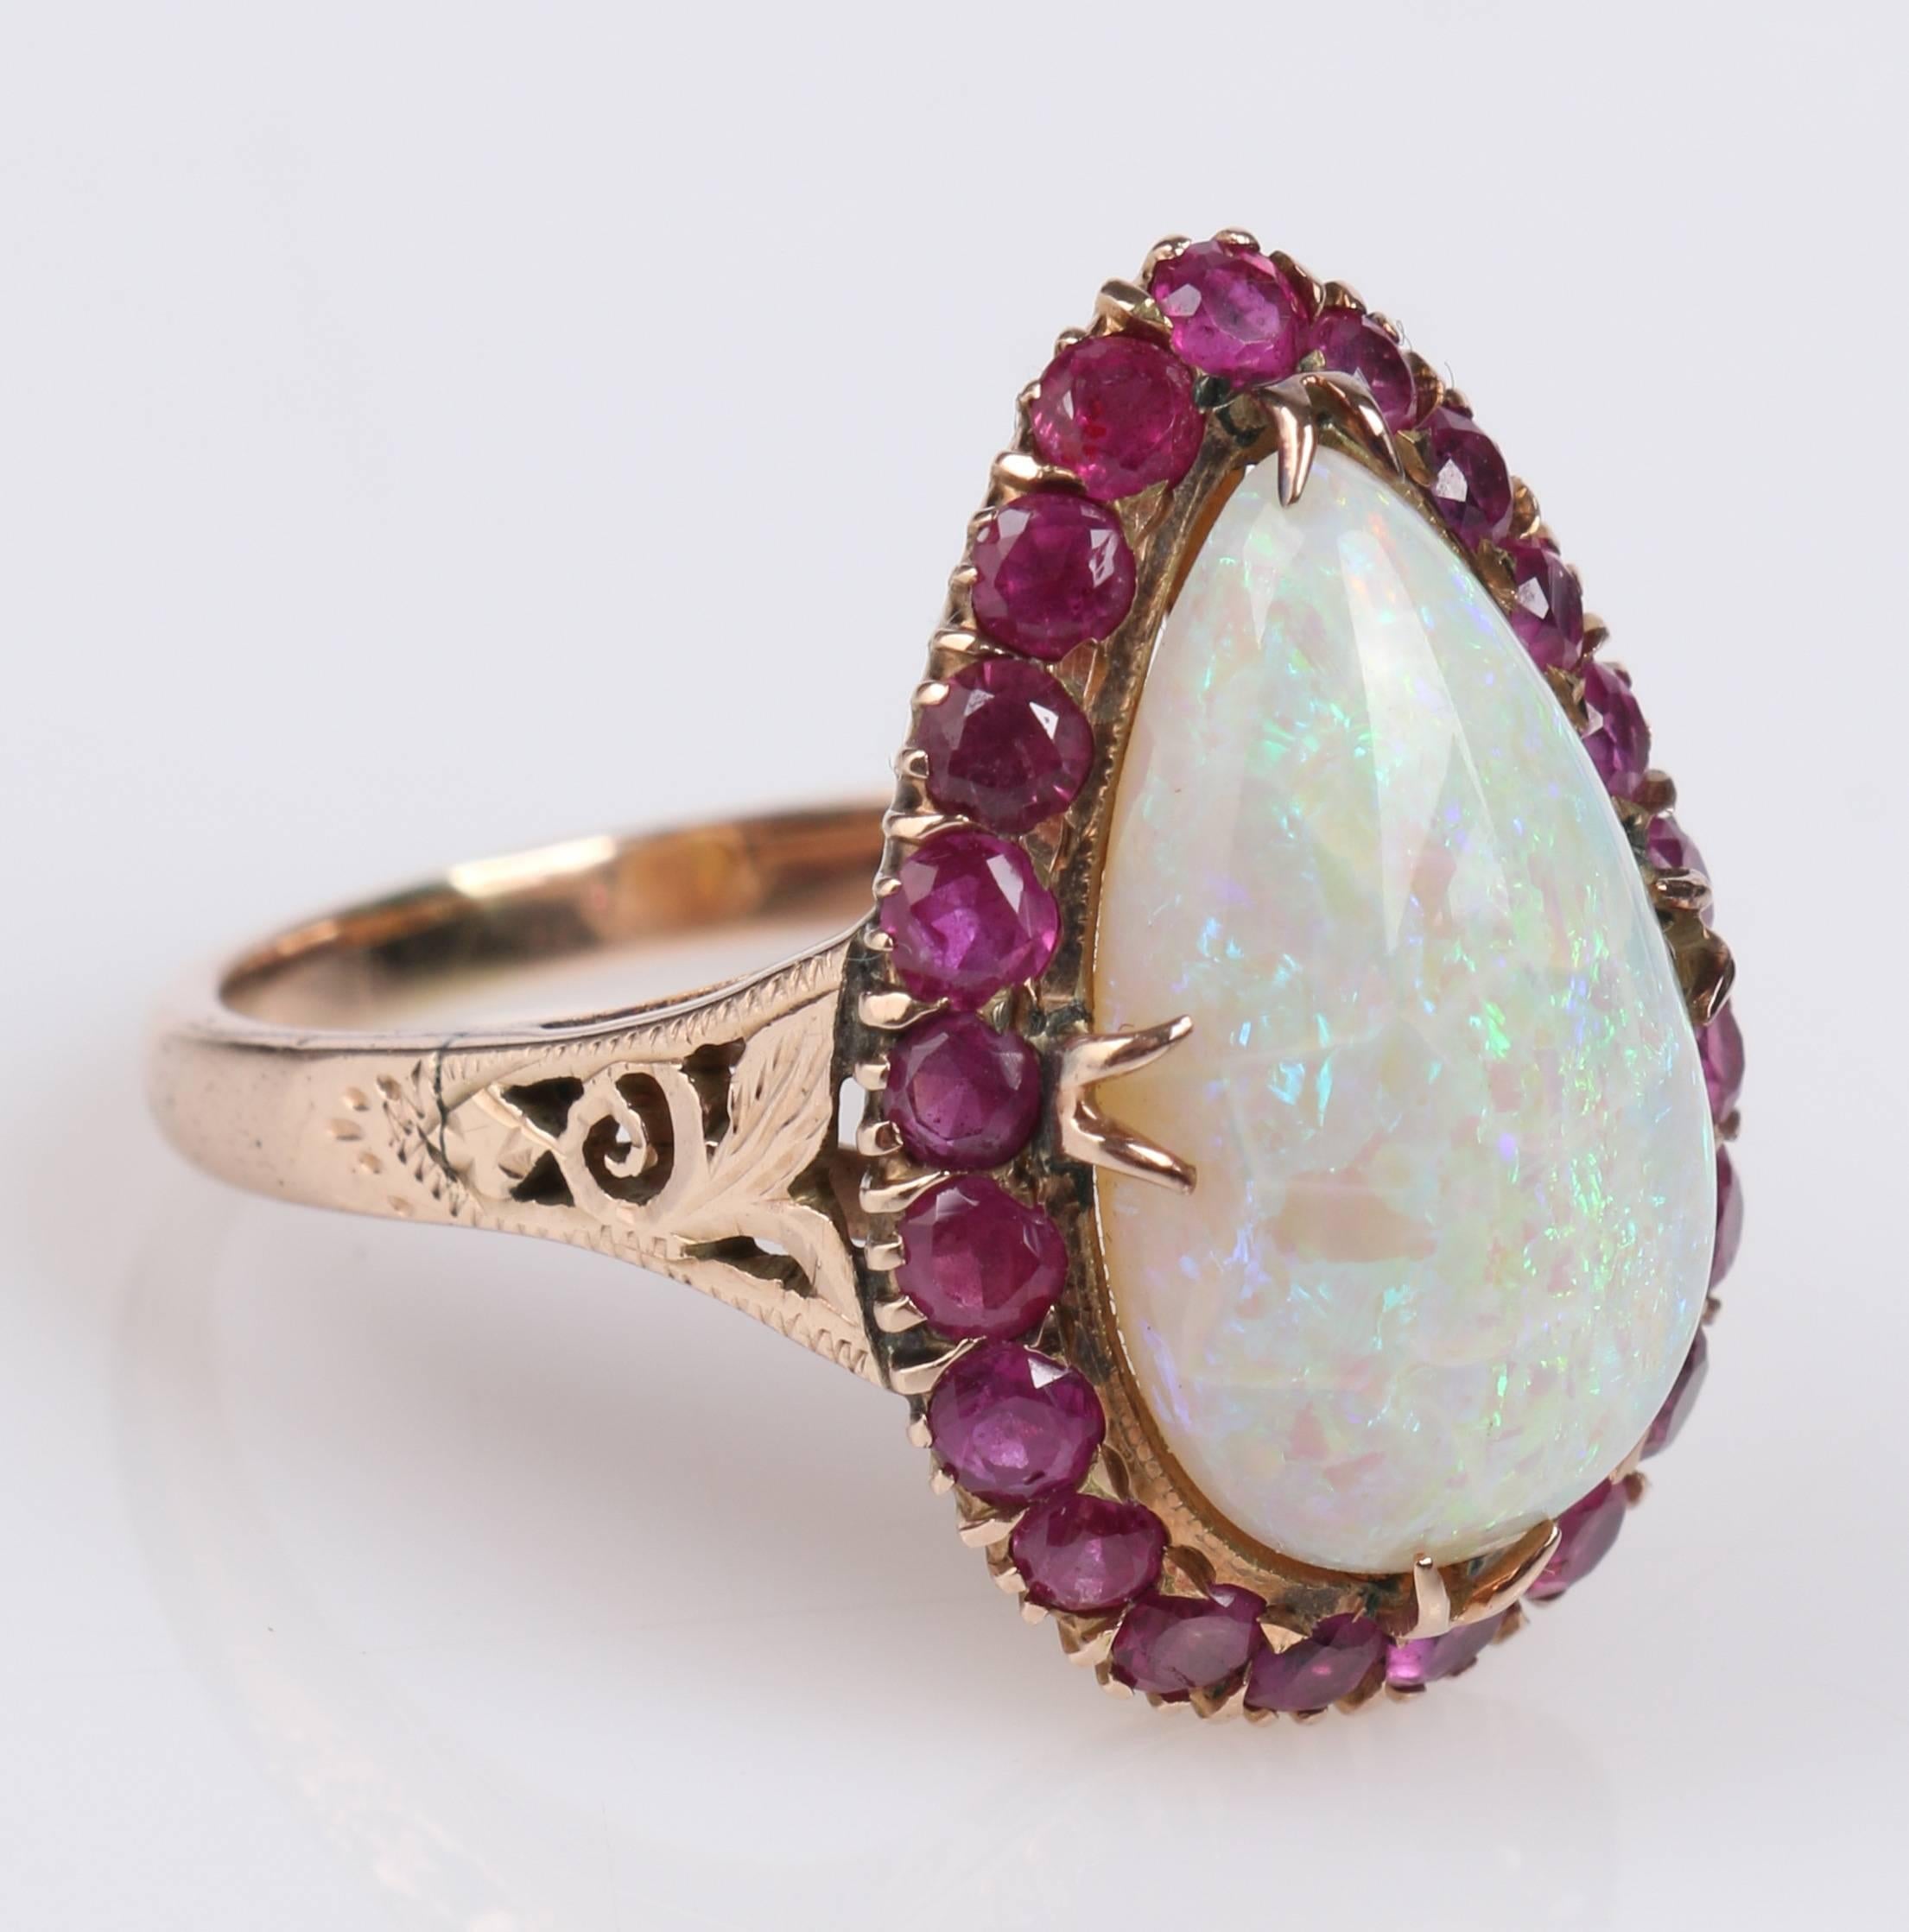 c.1930's Large Teardrop Opal Ruby Rose Gold 14 KT Ring Size 6.75 - 7 2